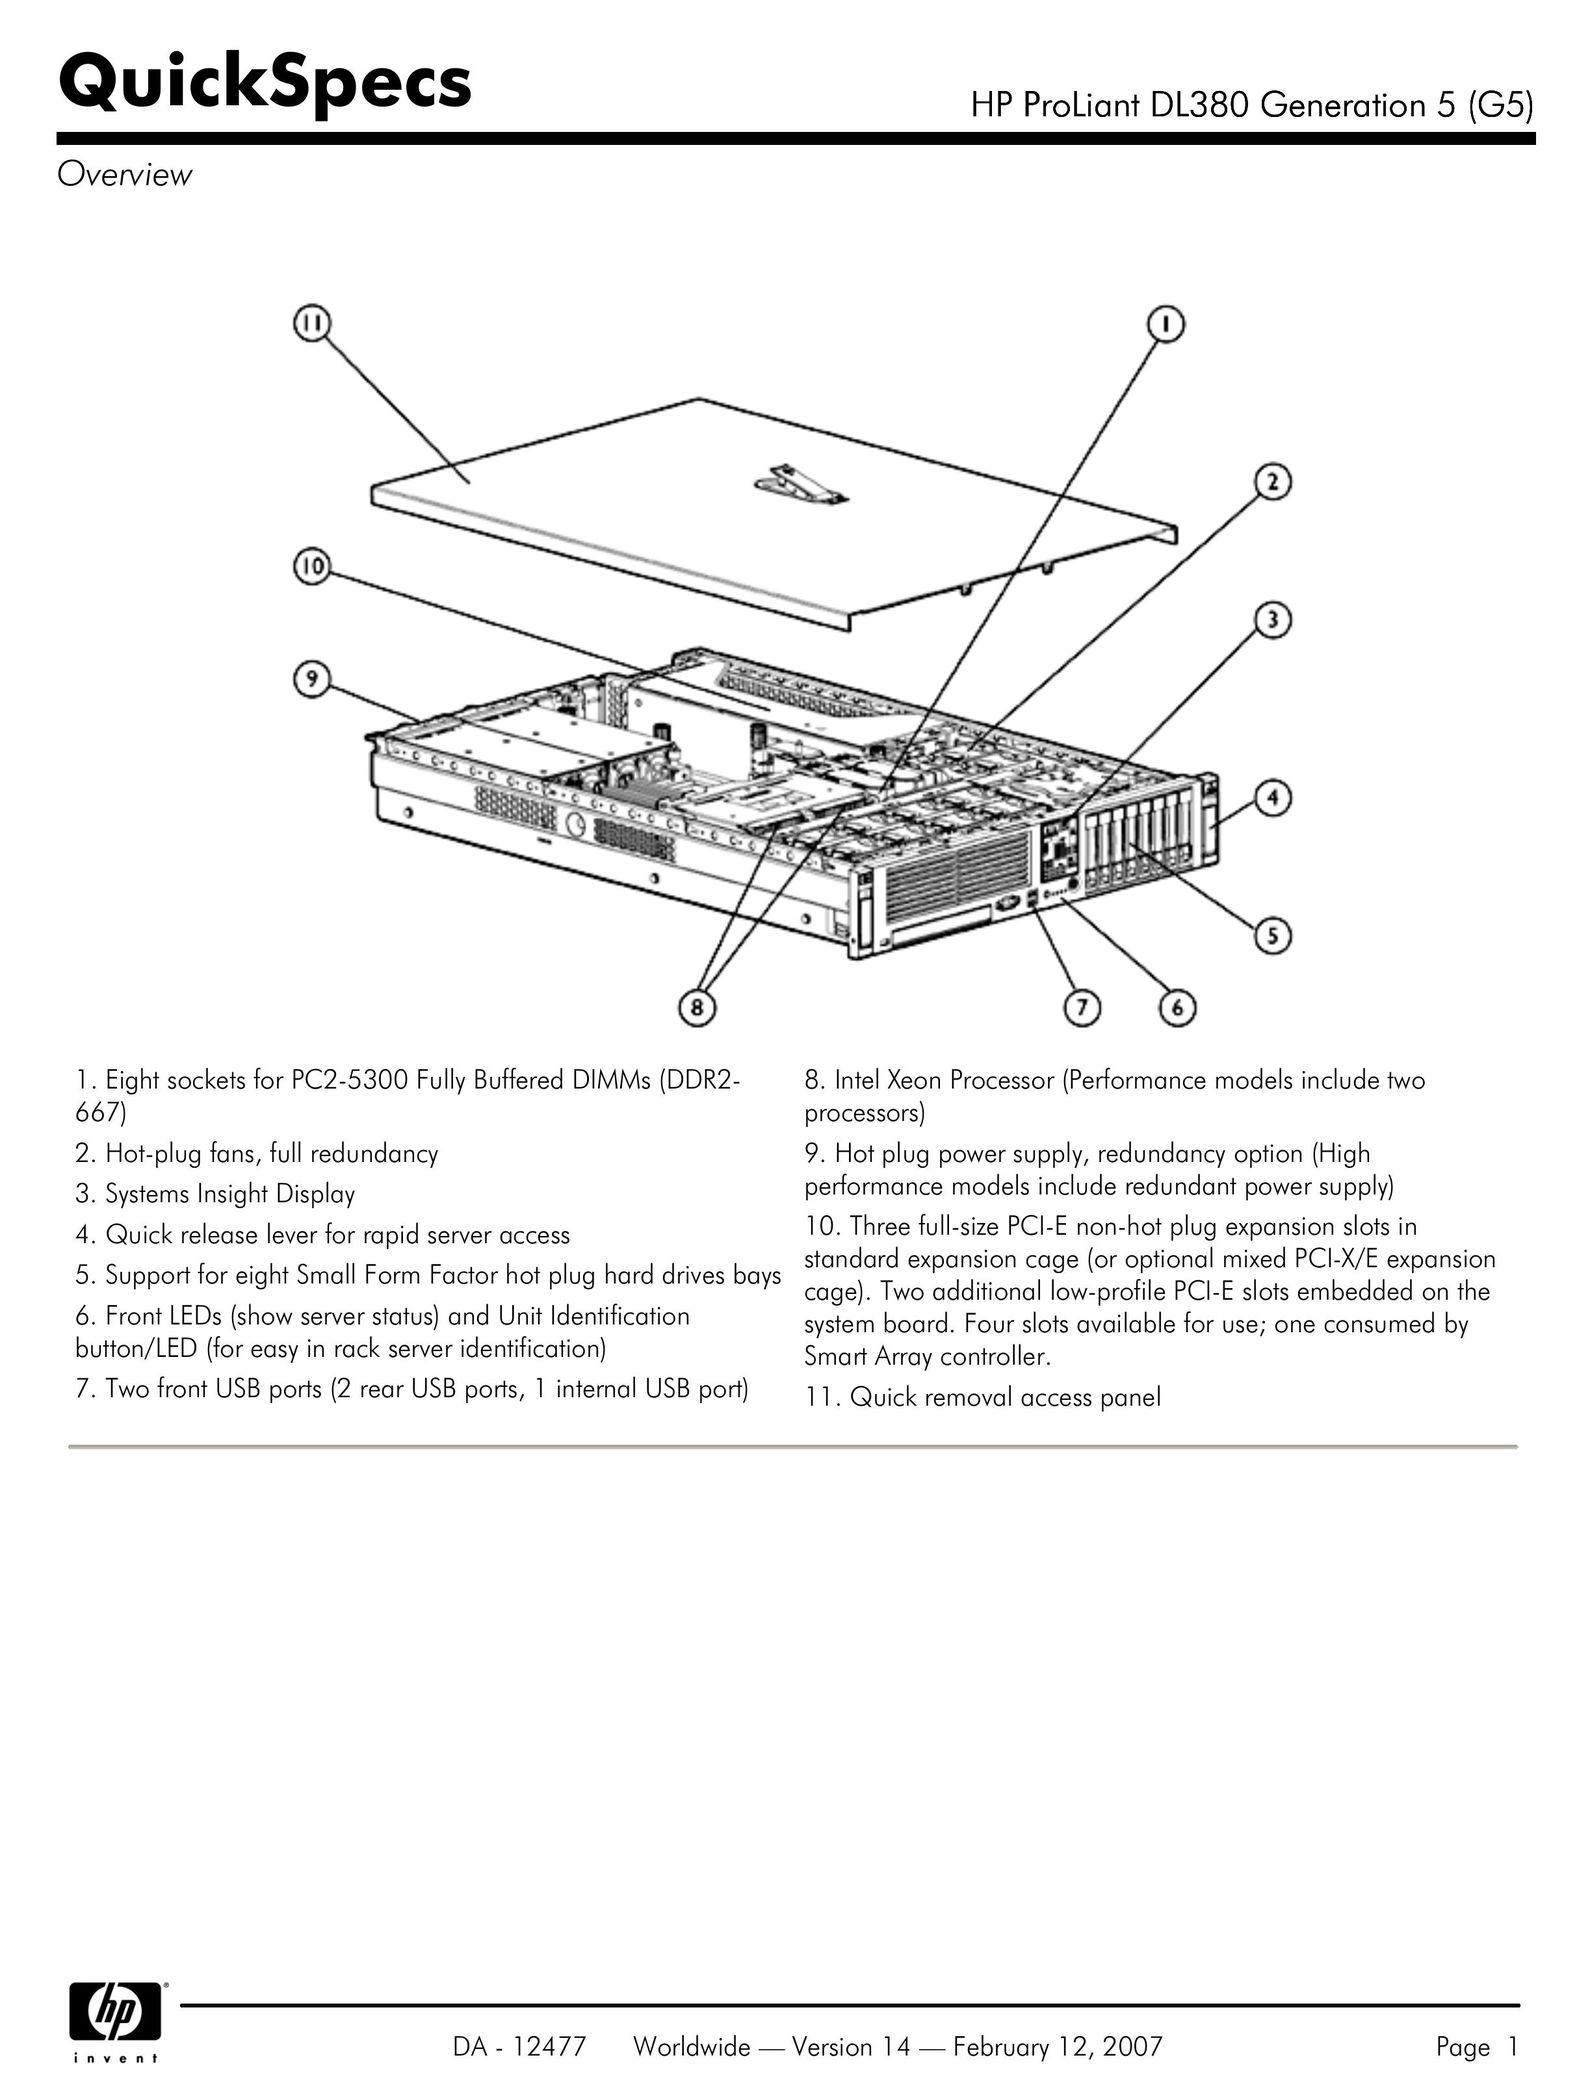 HP (Hewlett-Packard) DL380 Stereo System User Manual